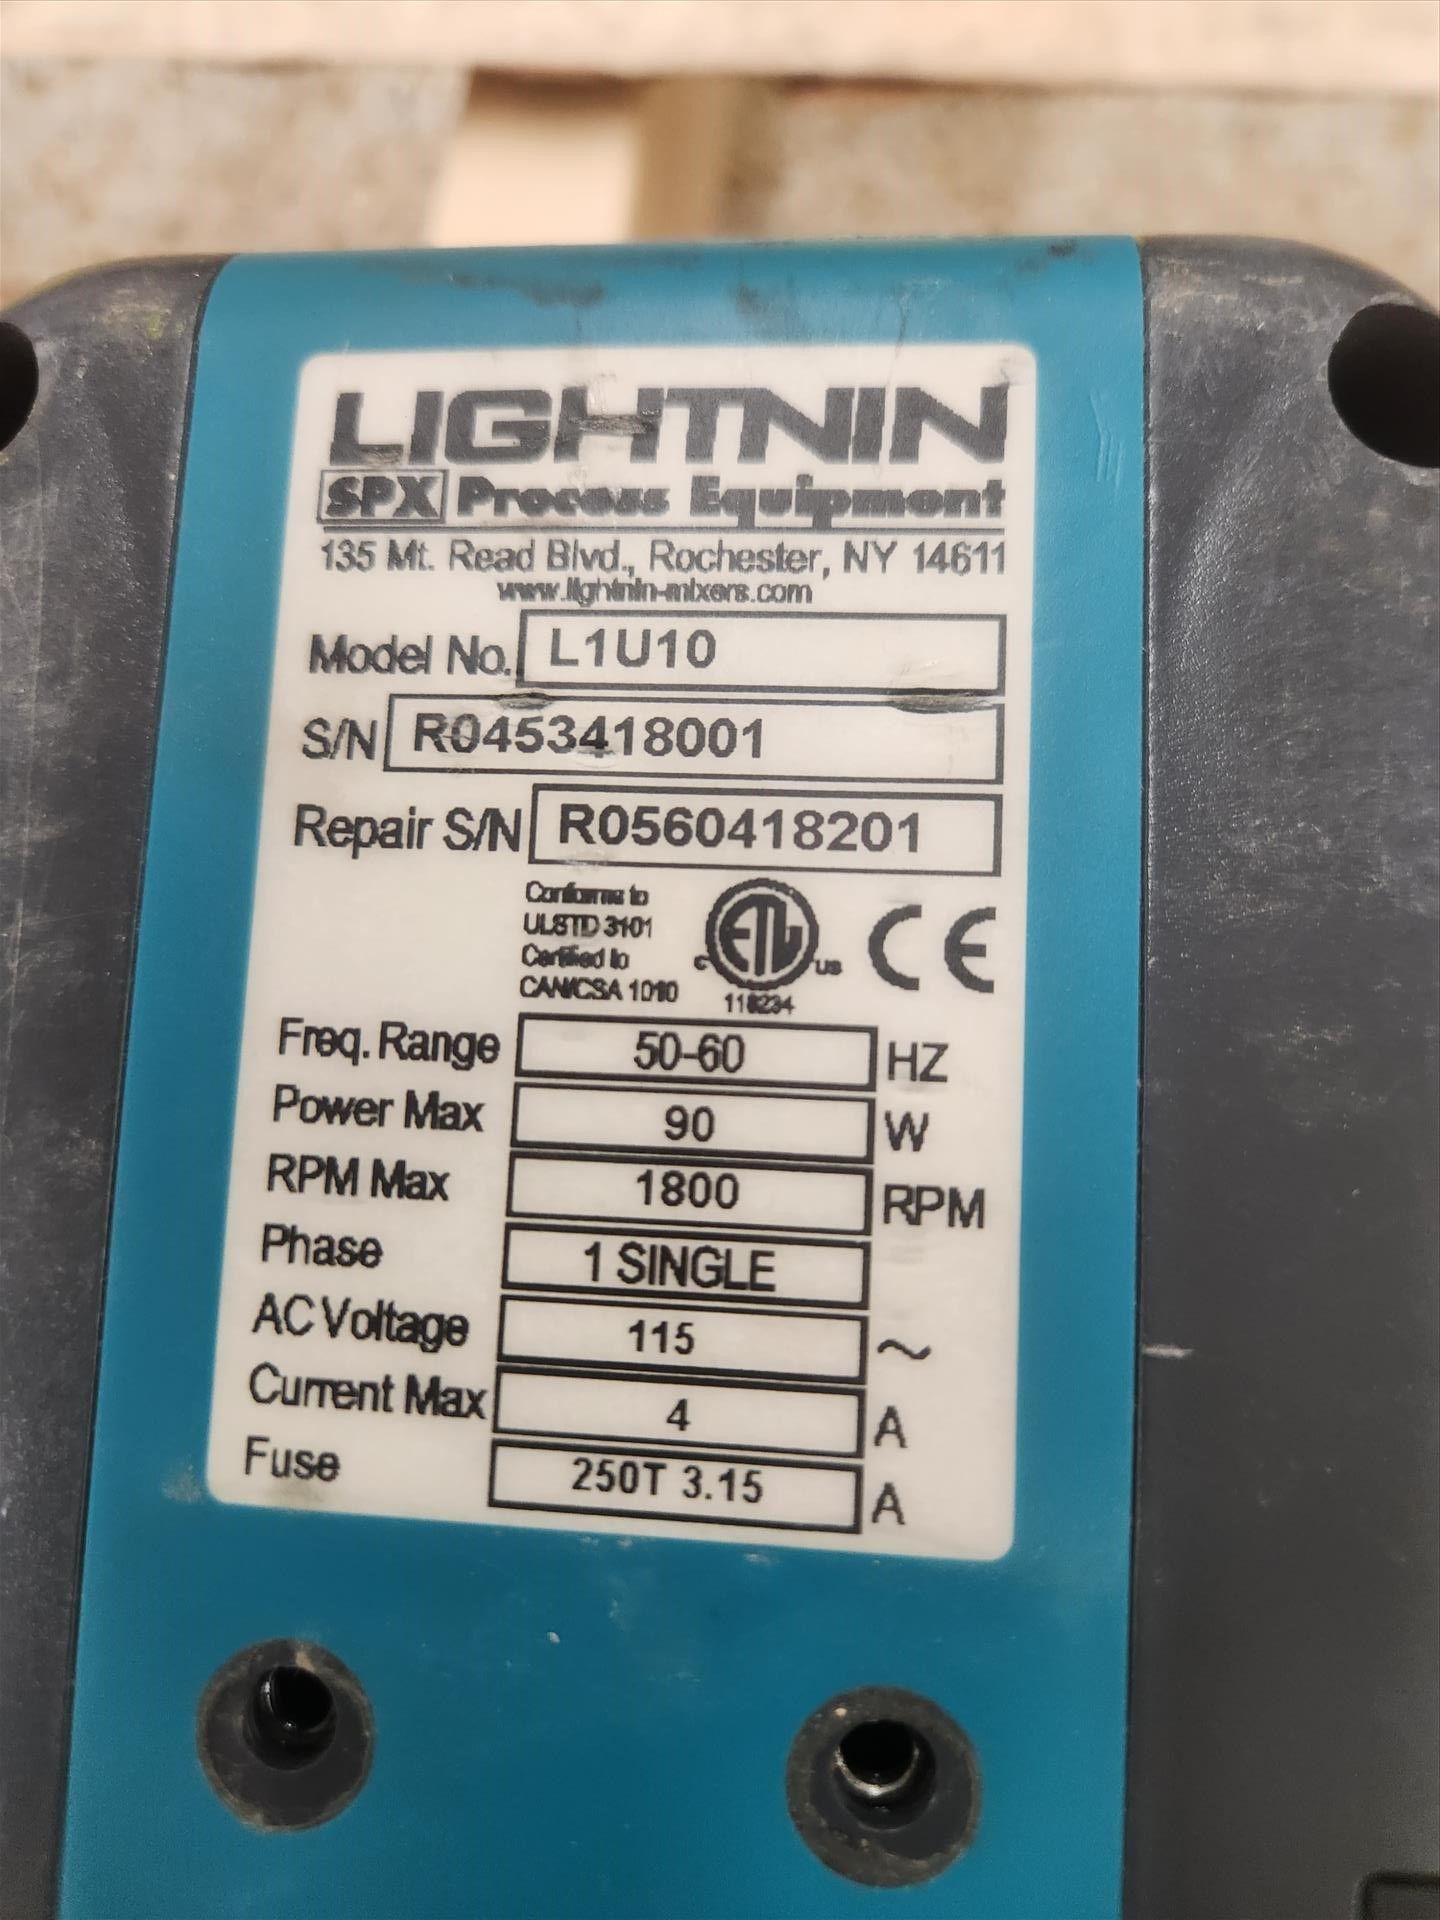 Lightnin SPX LabMaster mixer, mod. L1U10 - Image 2 of 2